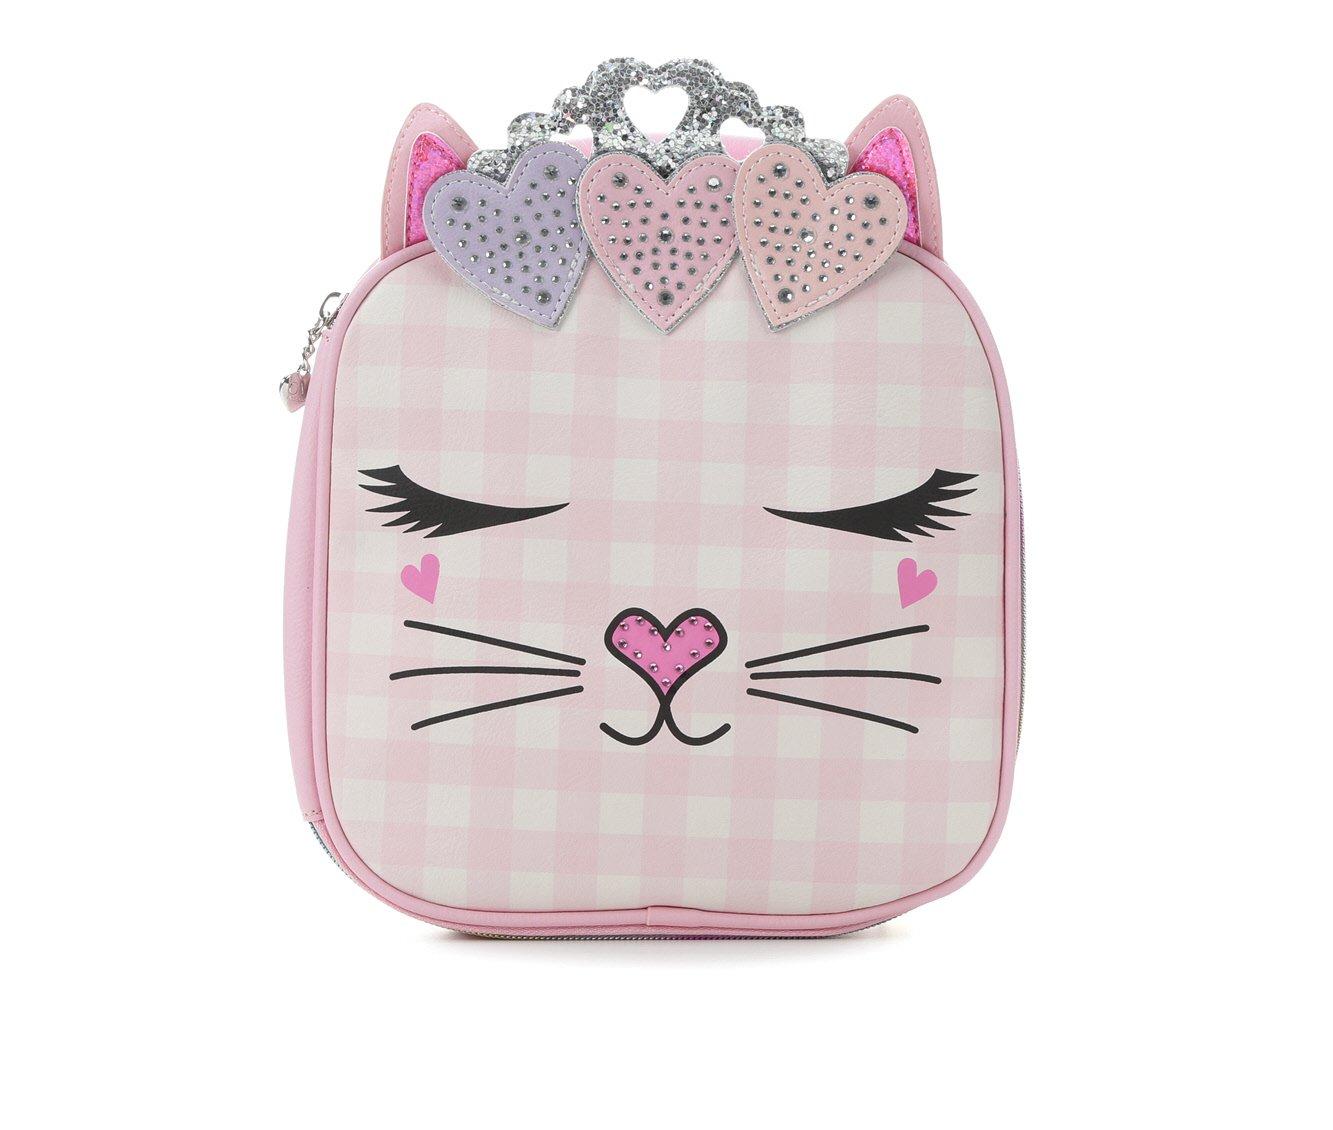 OMG Accessories Bella Heart Tiara Lunch Bag